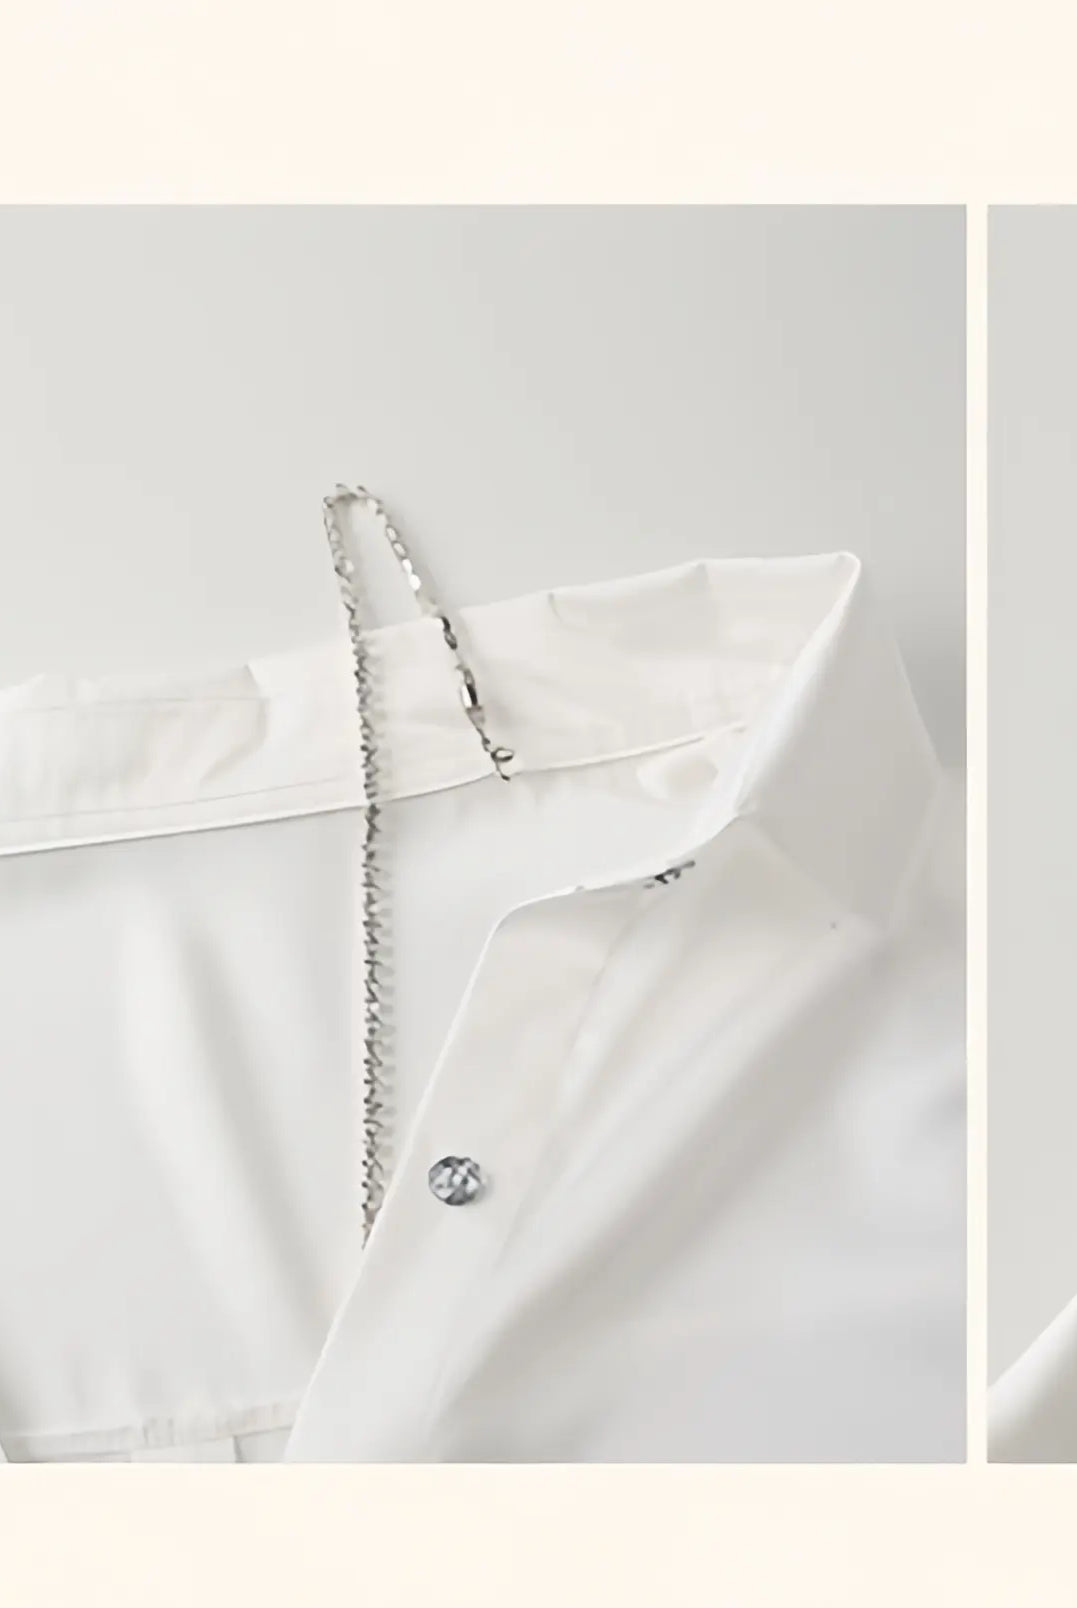 Sleek Satin Deep V-Neck Lingerie Shirt with Rhinestone Chain - Elegant Nightwear Set Peach Passion